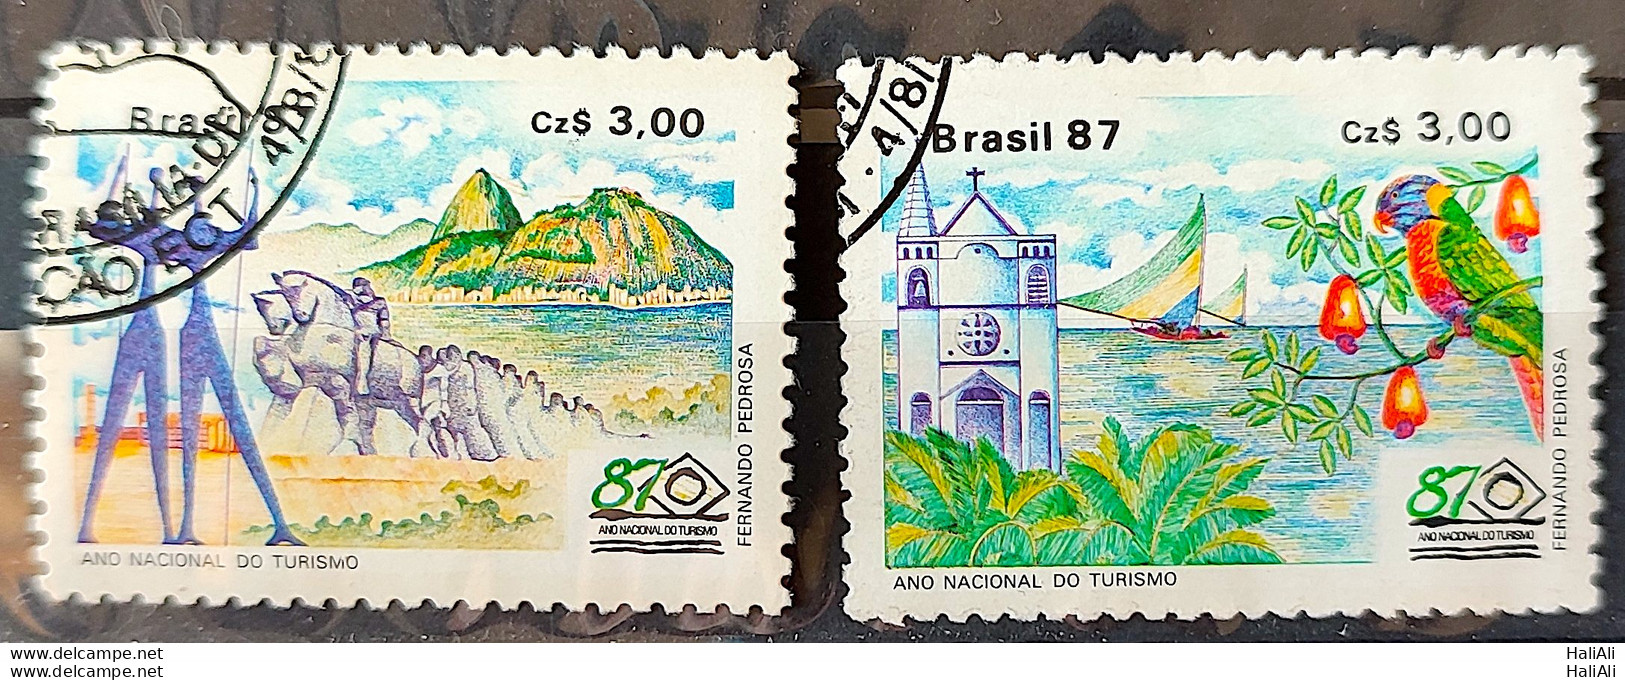 C 1556 Brazil Stamp Tourism Brasilia Rio De Janeiro Bahia Ceara 1987 Complete Series Circulated 2 - Used Stamps